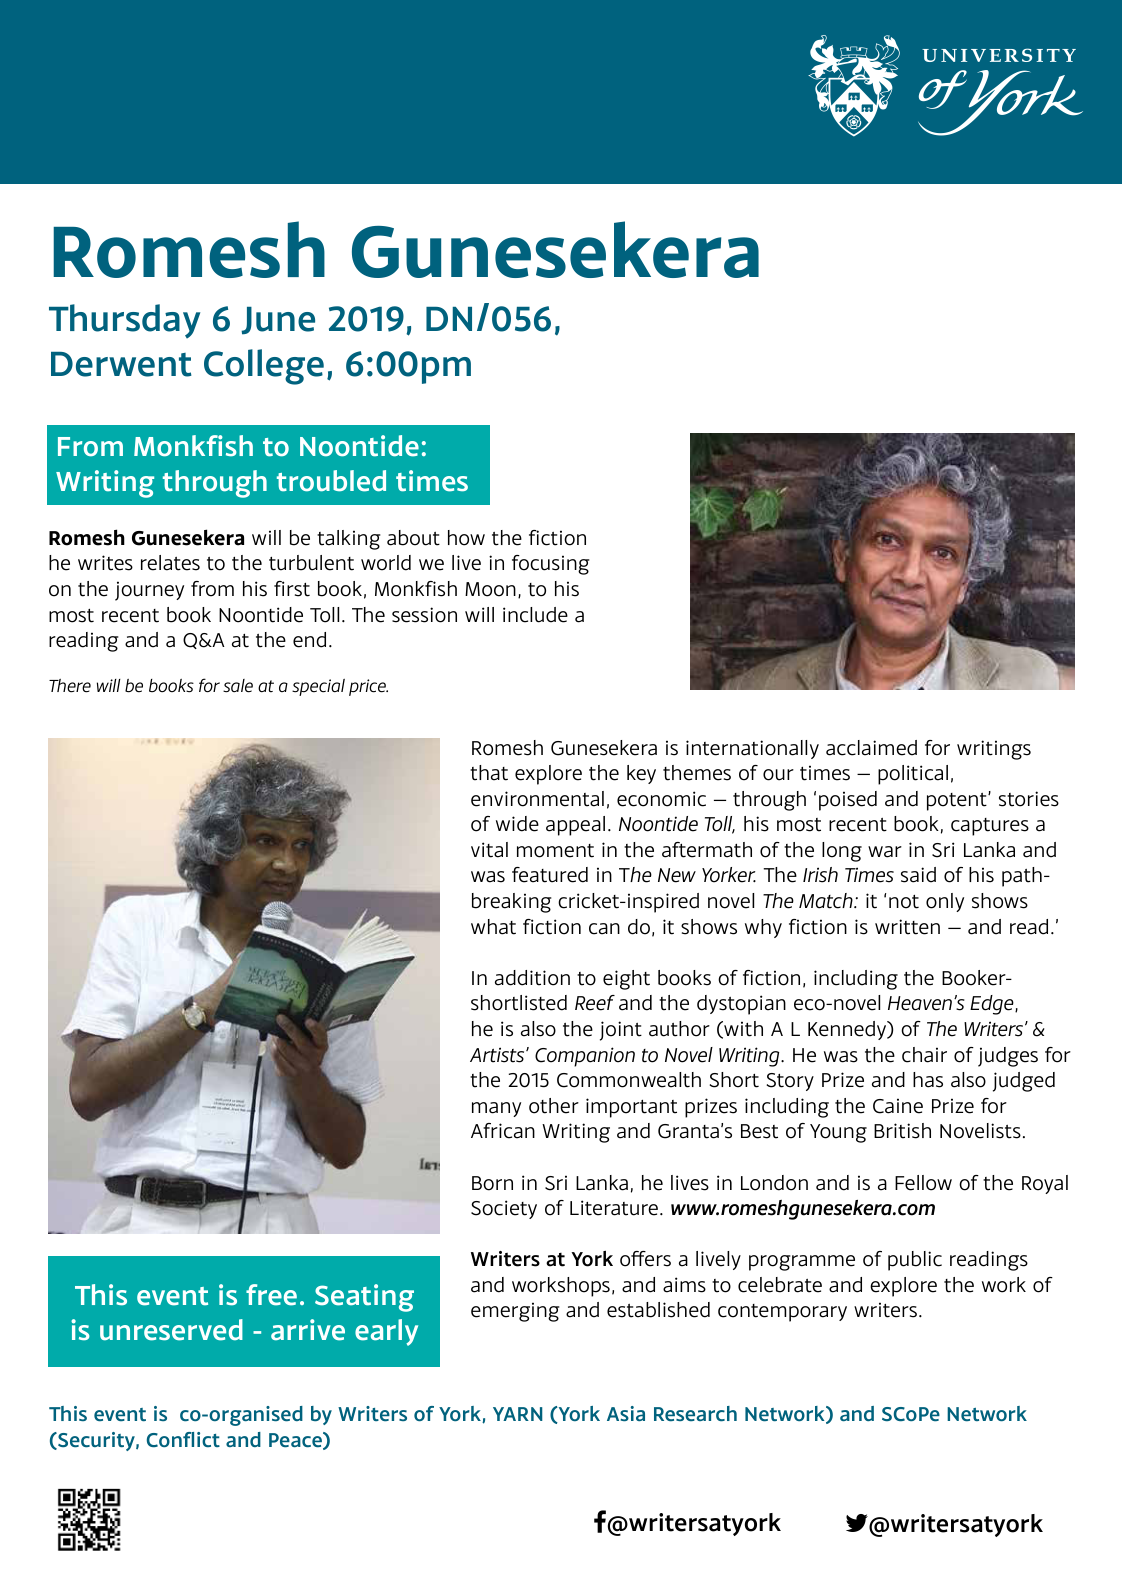 Romesh Gunesekera Talk